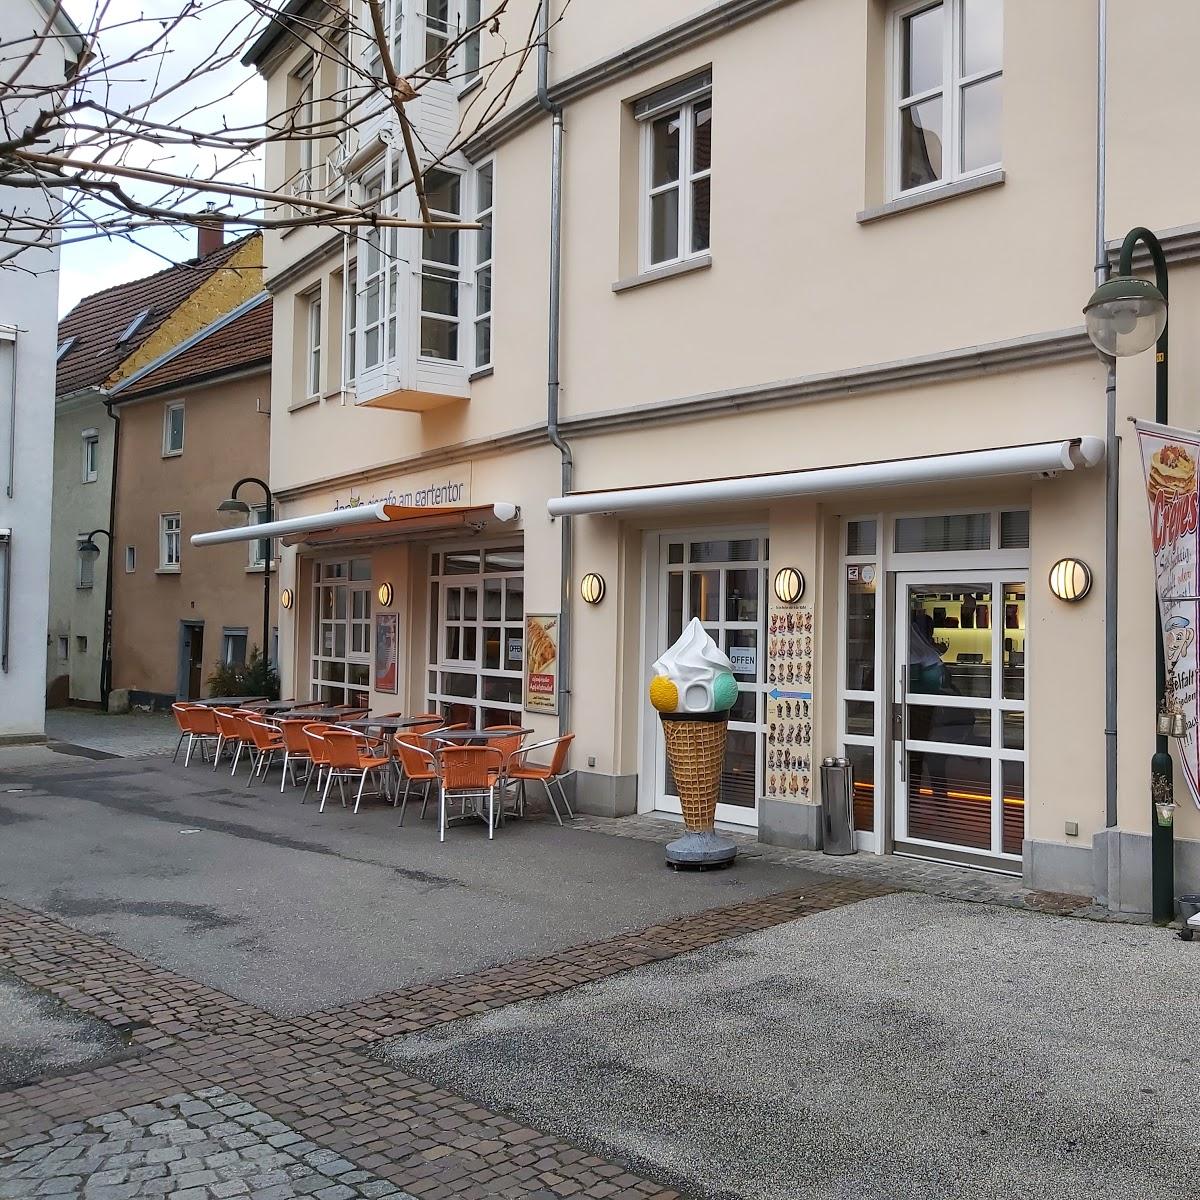 Restaurant "danys eiscafe am gartentor" in Reutlingen